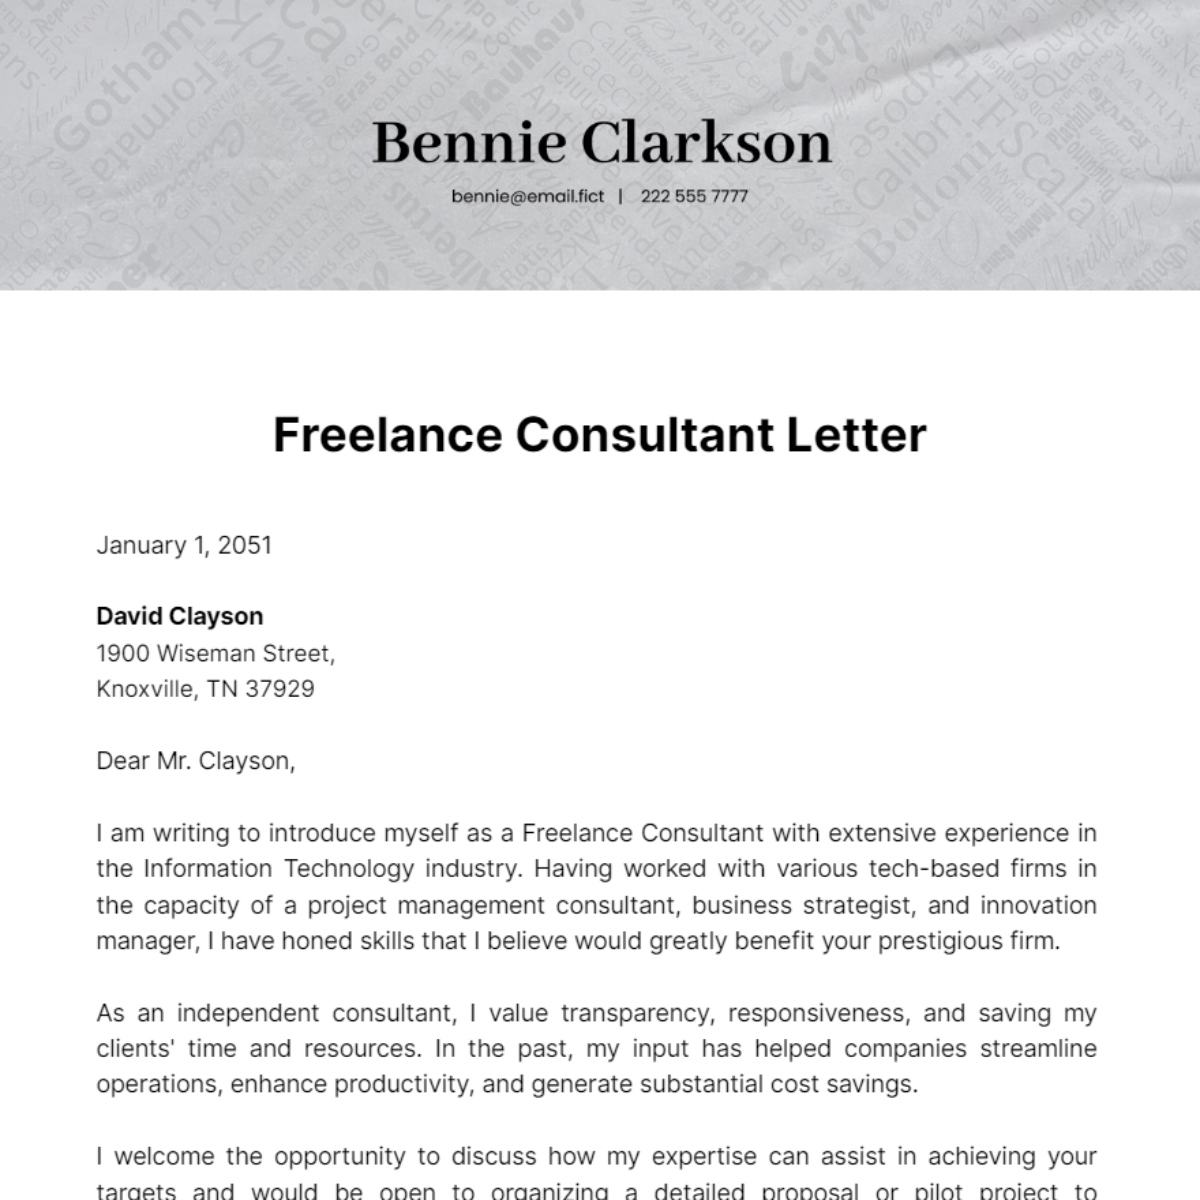 Freelance Consultant Letter Template